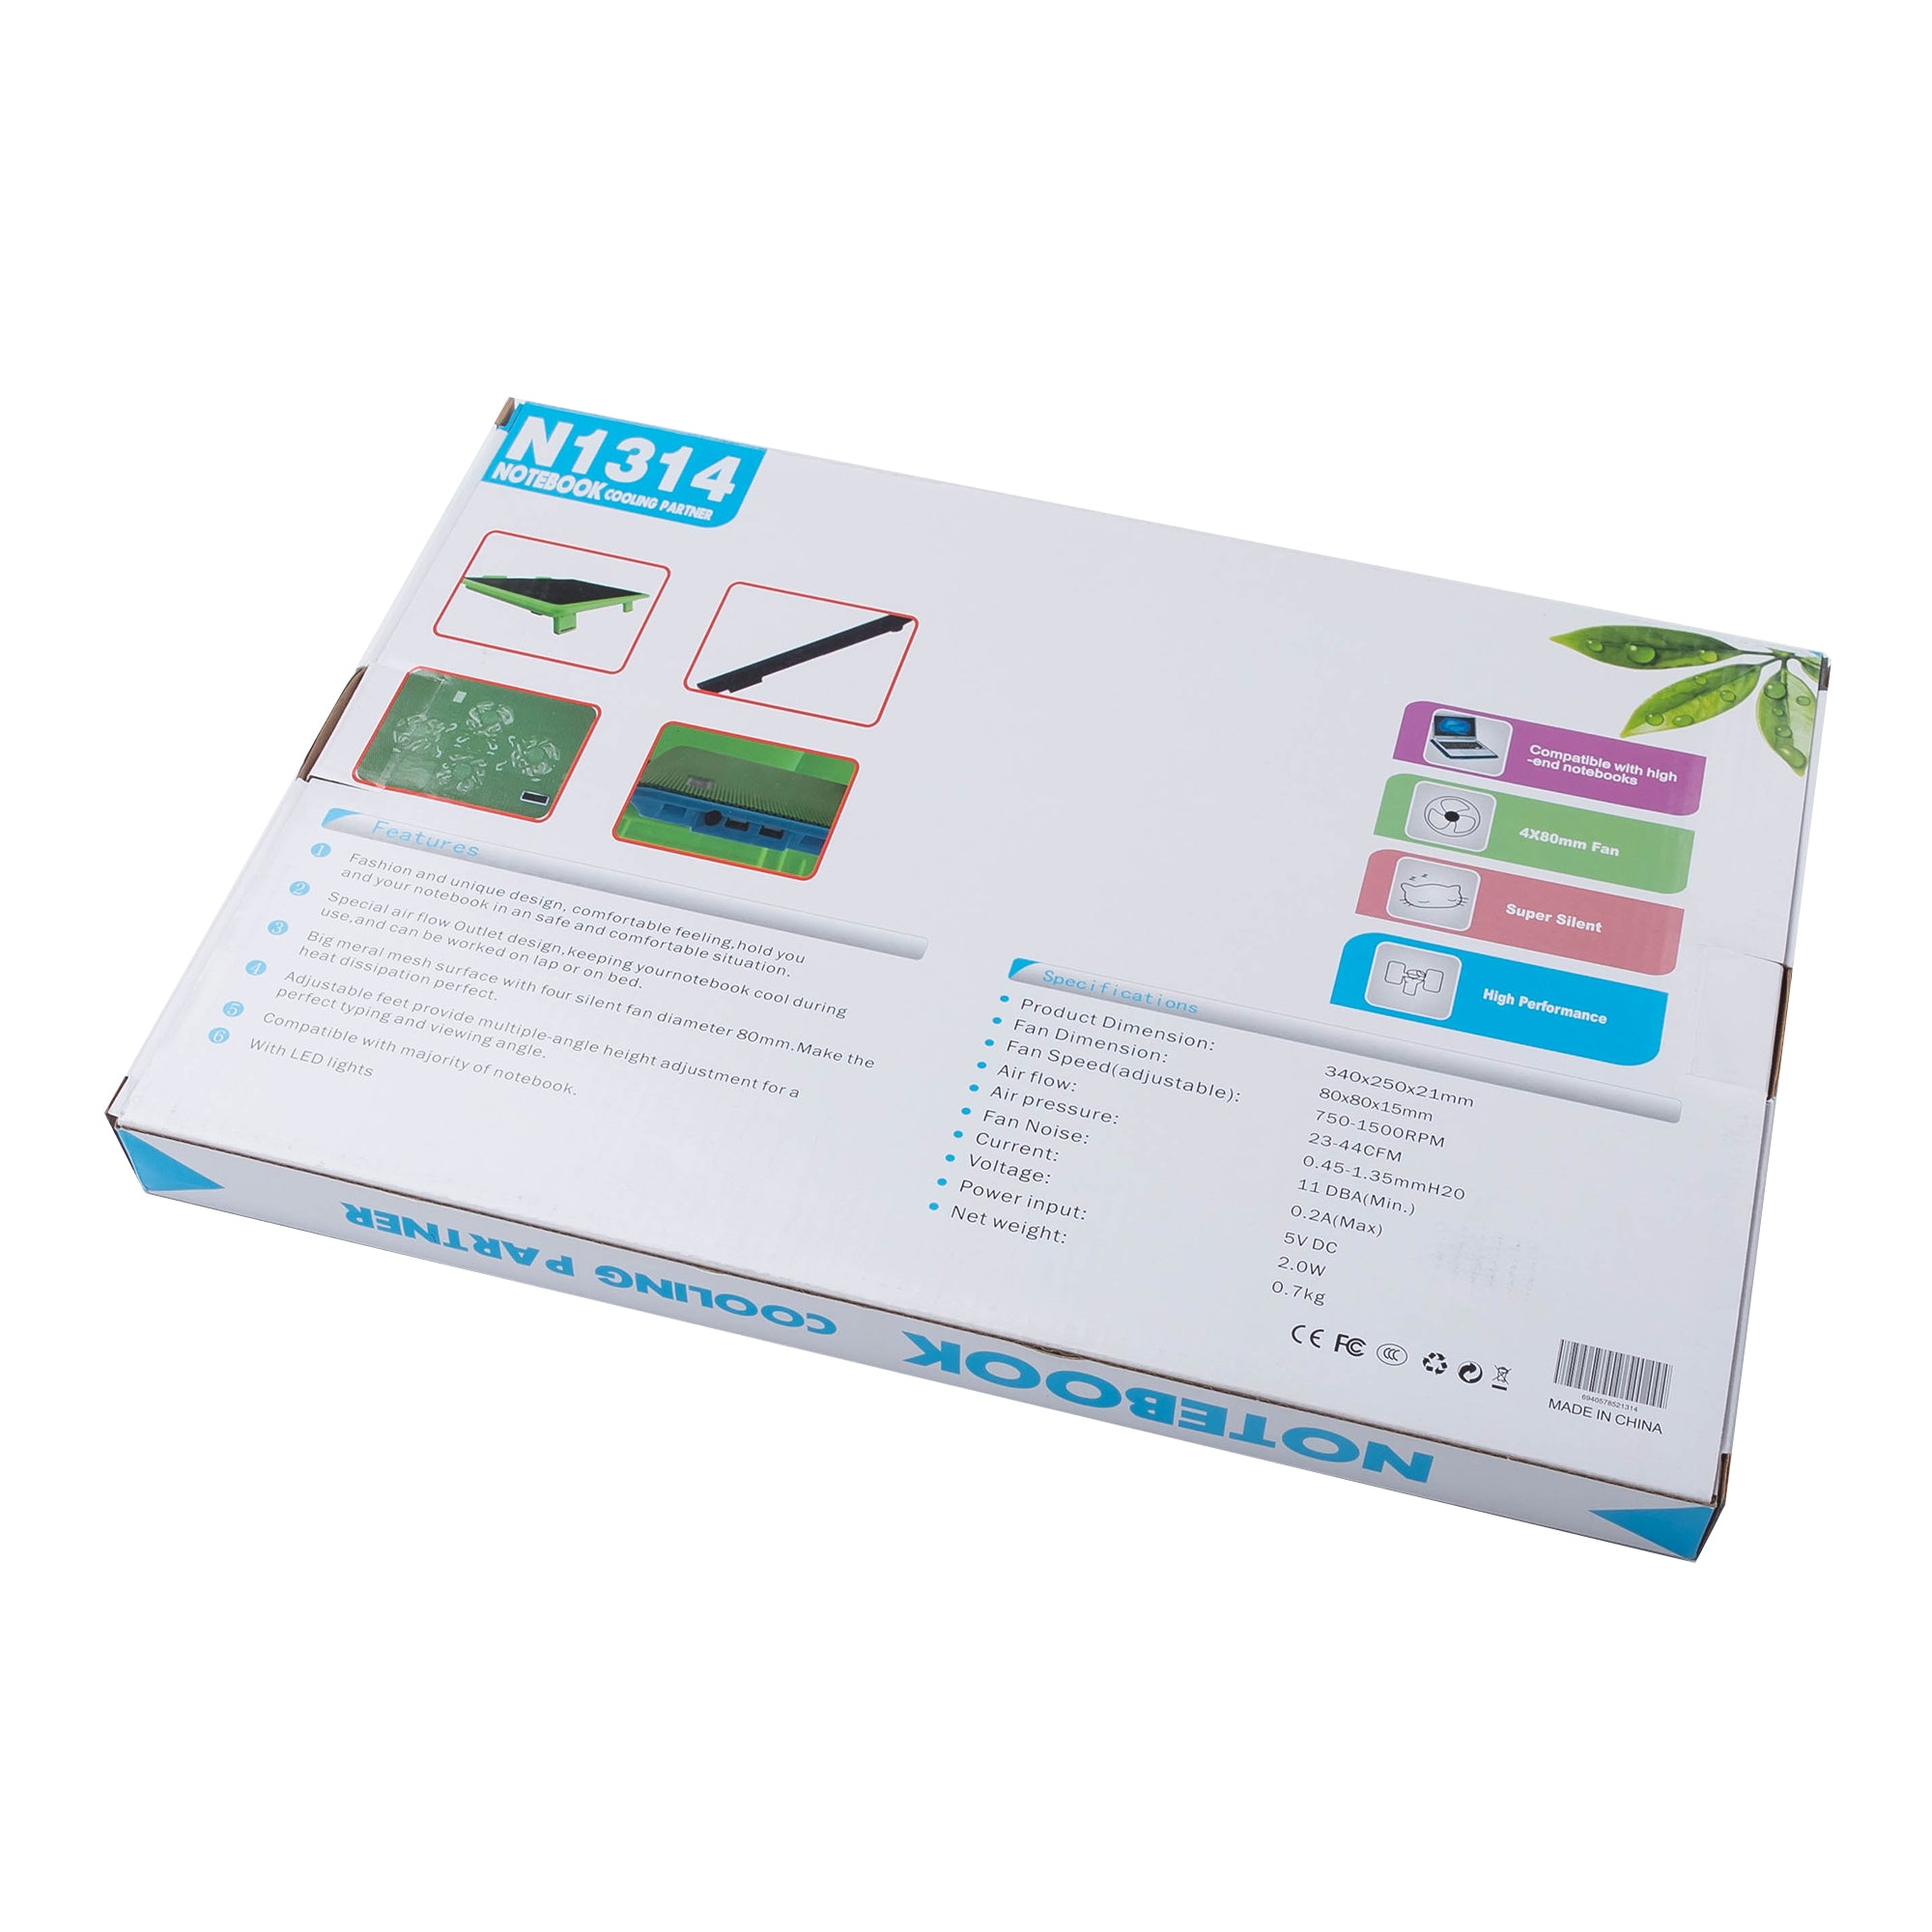 N1314 Notebook Heat Dissipation Base LED Light 4-Fan Cooler Stand Desktop Laptop Cooling Pad